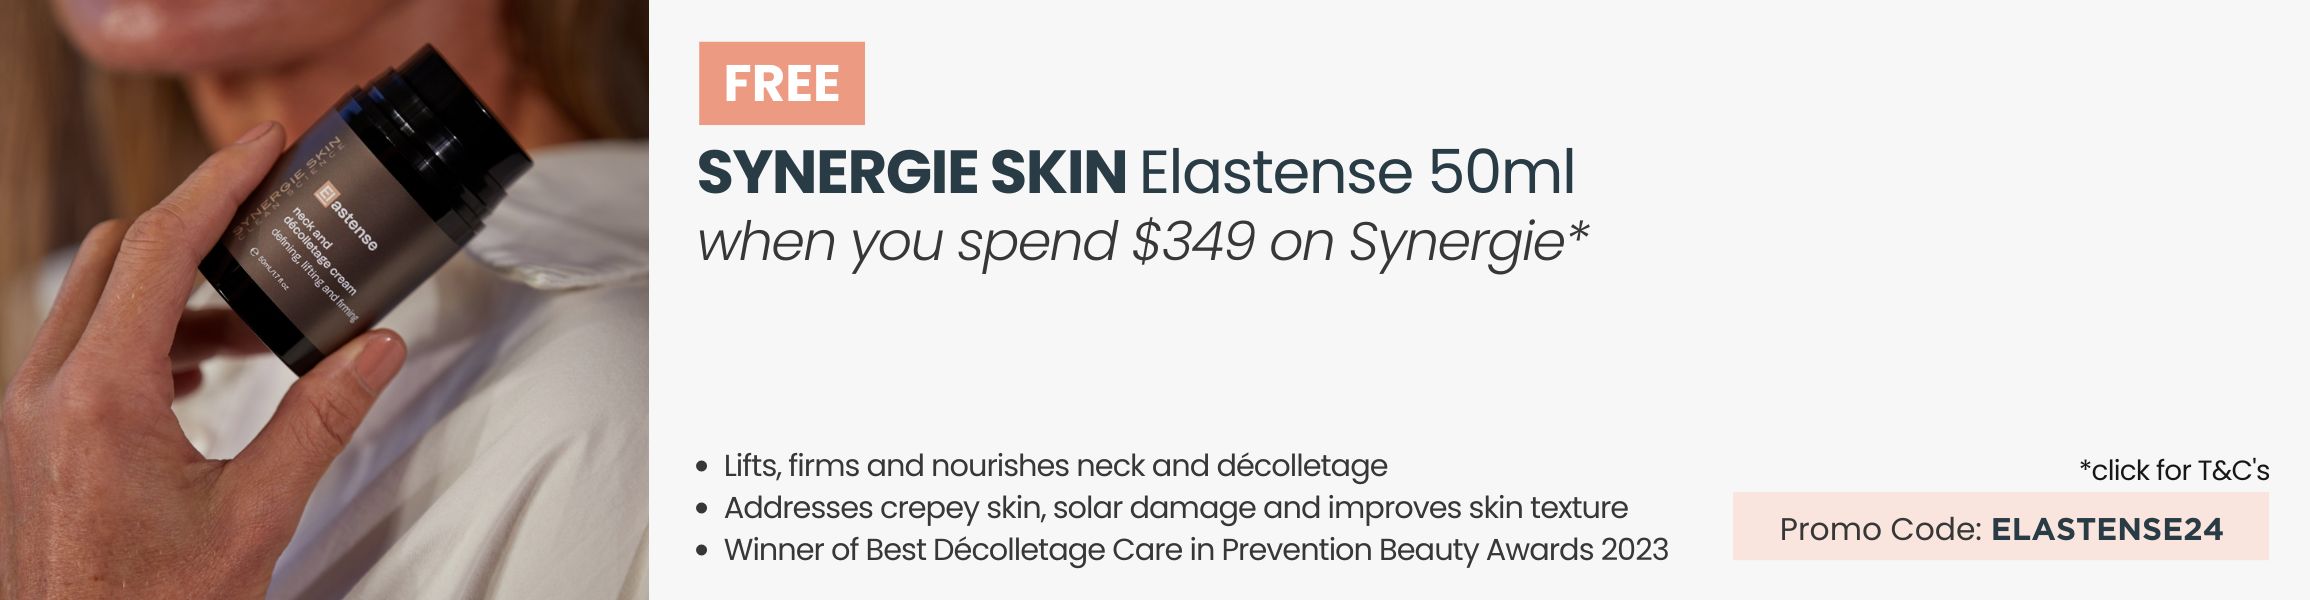 FREE Synergie Skin Elastense 50ml worth $149. Min spend $349 on Synergie. Promo Code: ELASTENSE24